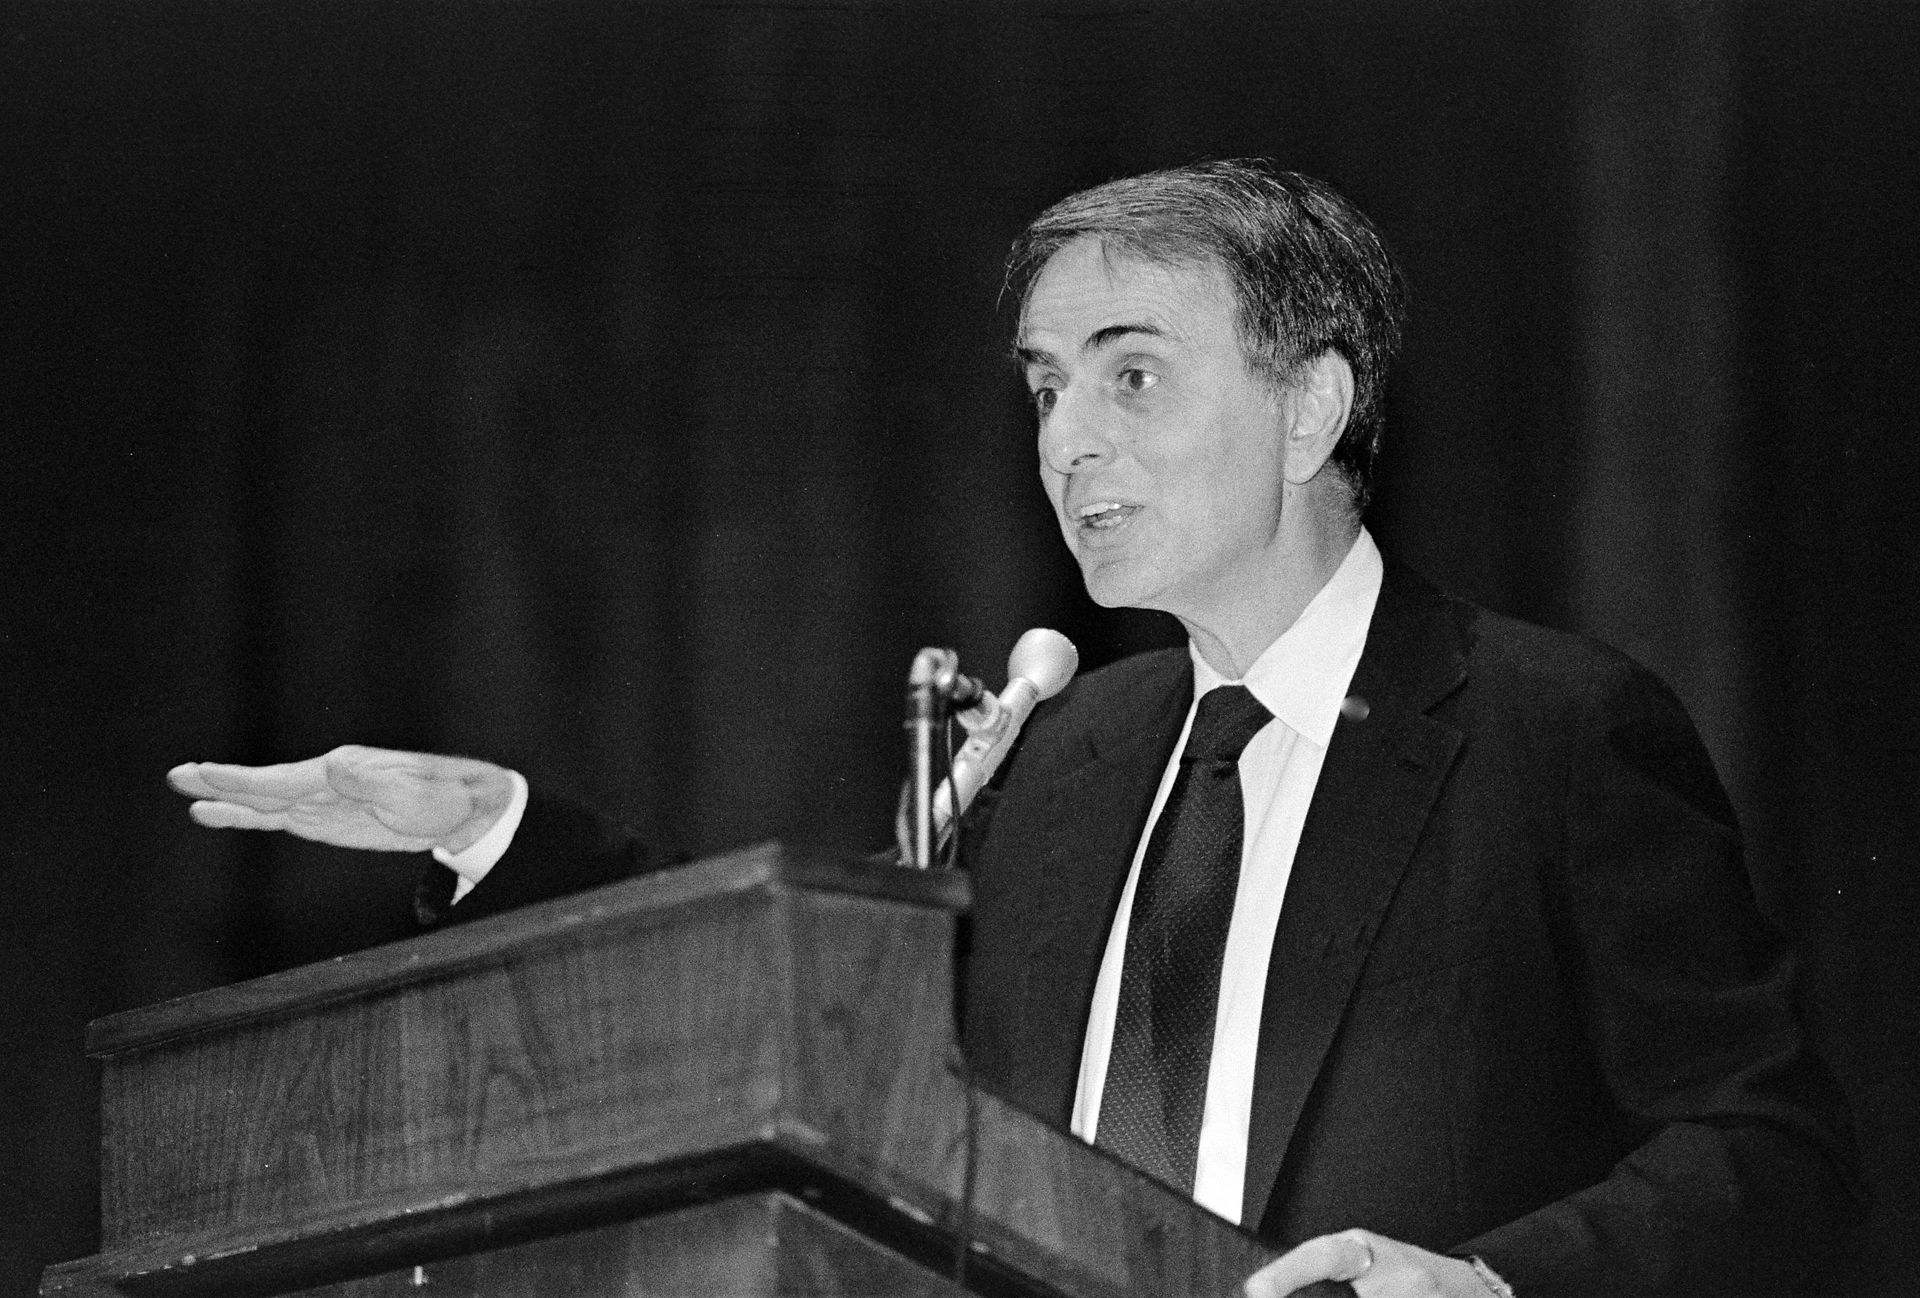 Carl Sagan in 1987